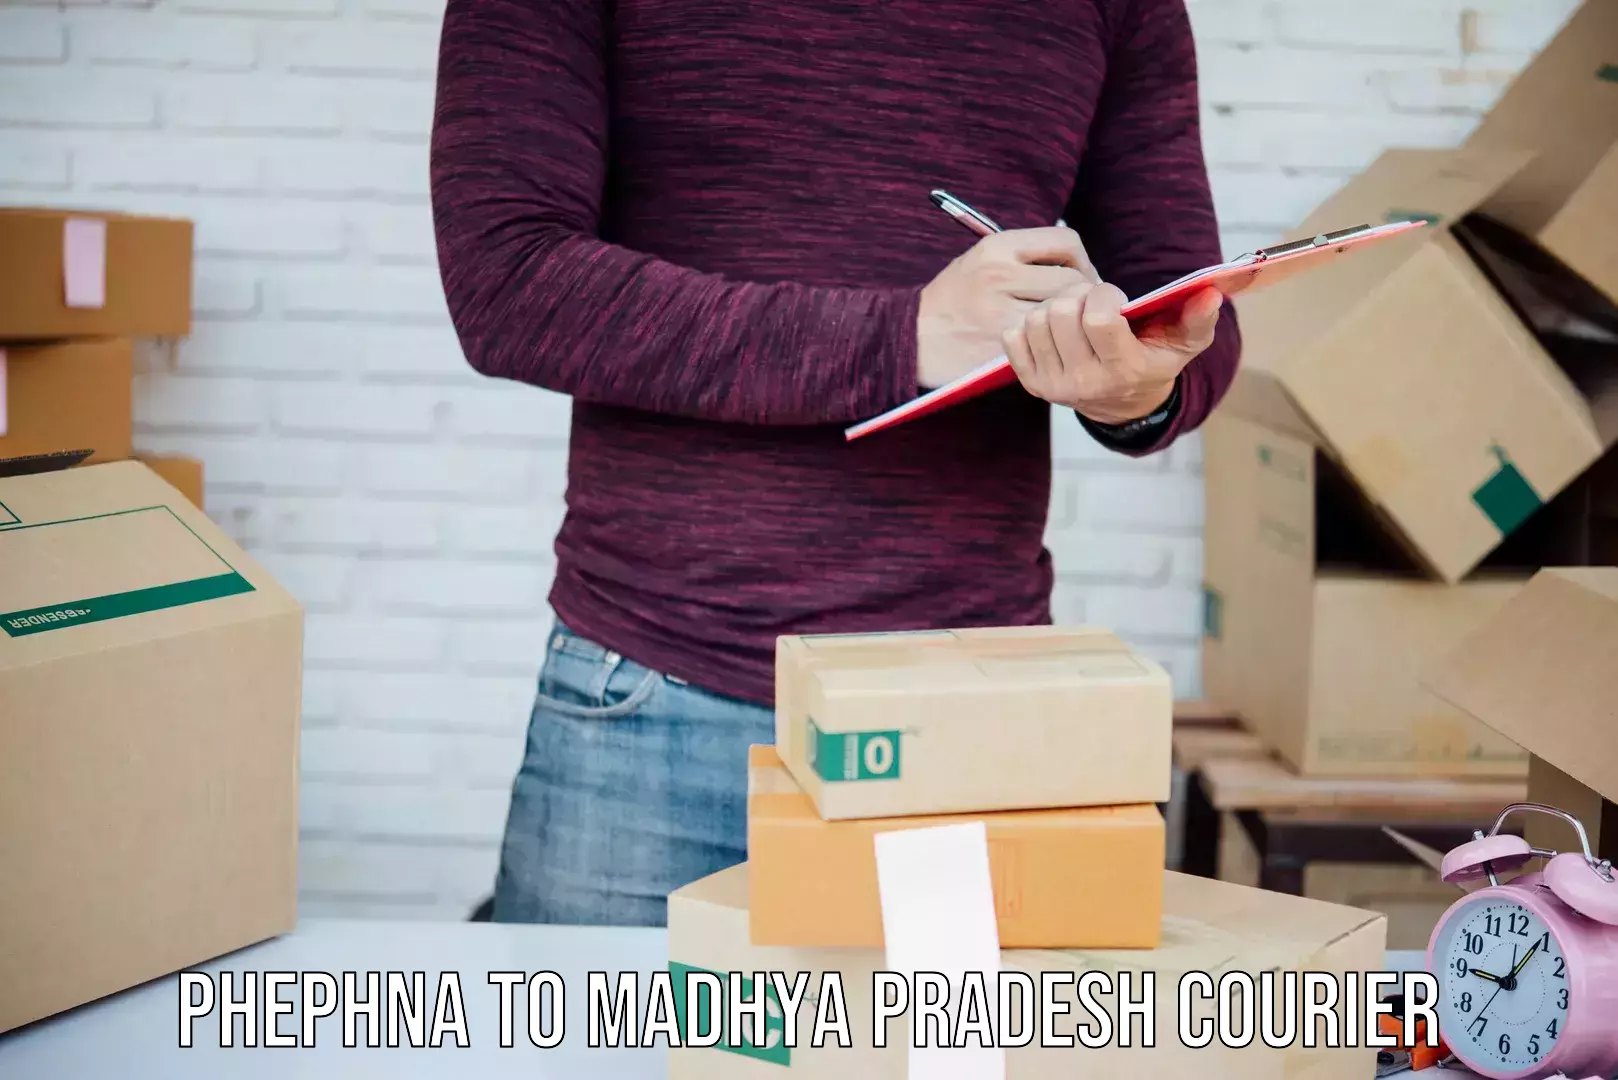 Lightweight parcel options Phephna to Kotma